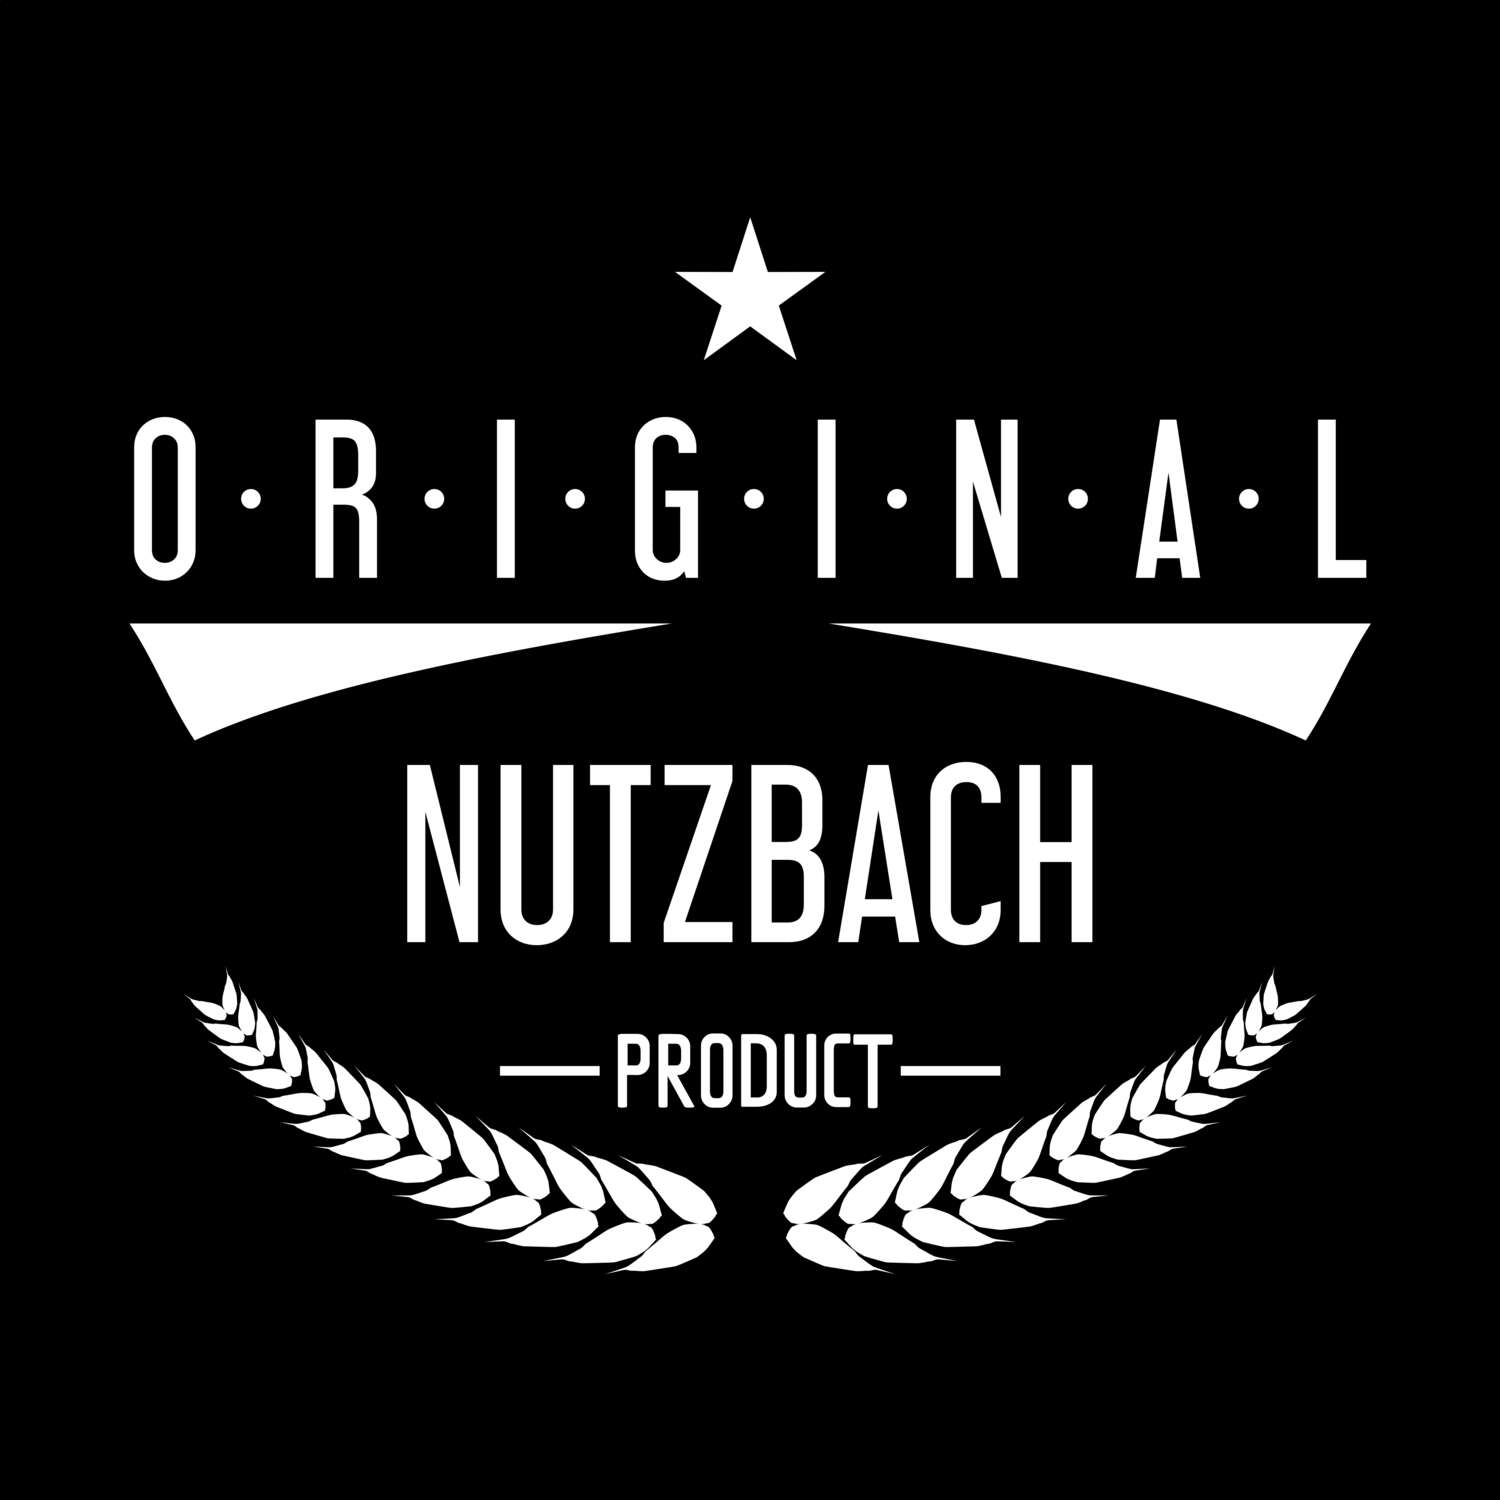 Nutzbach T-Shirt »Original Product«